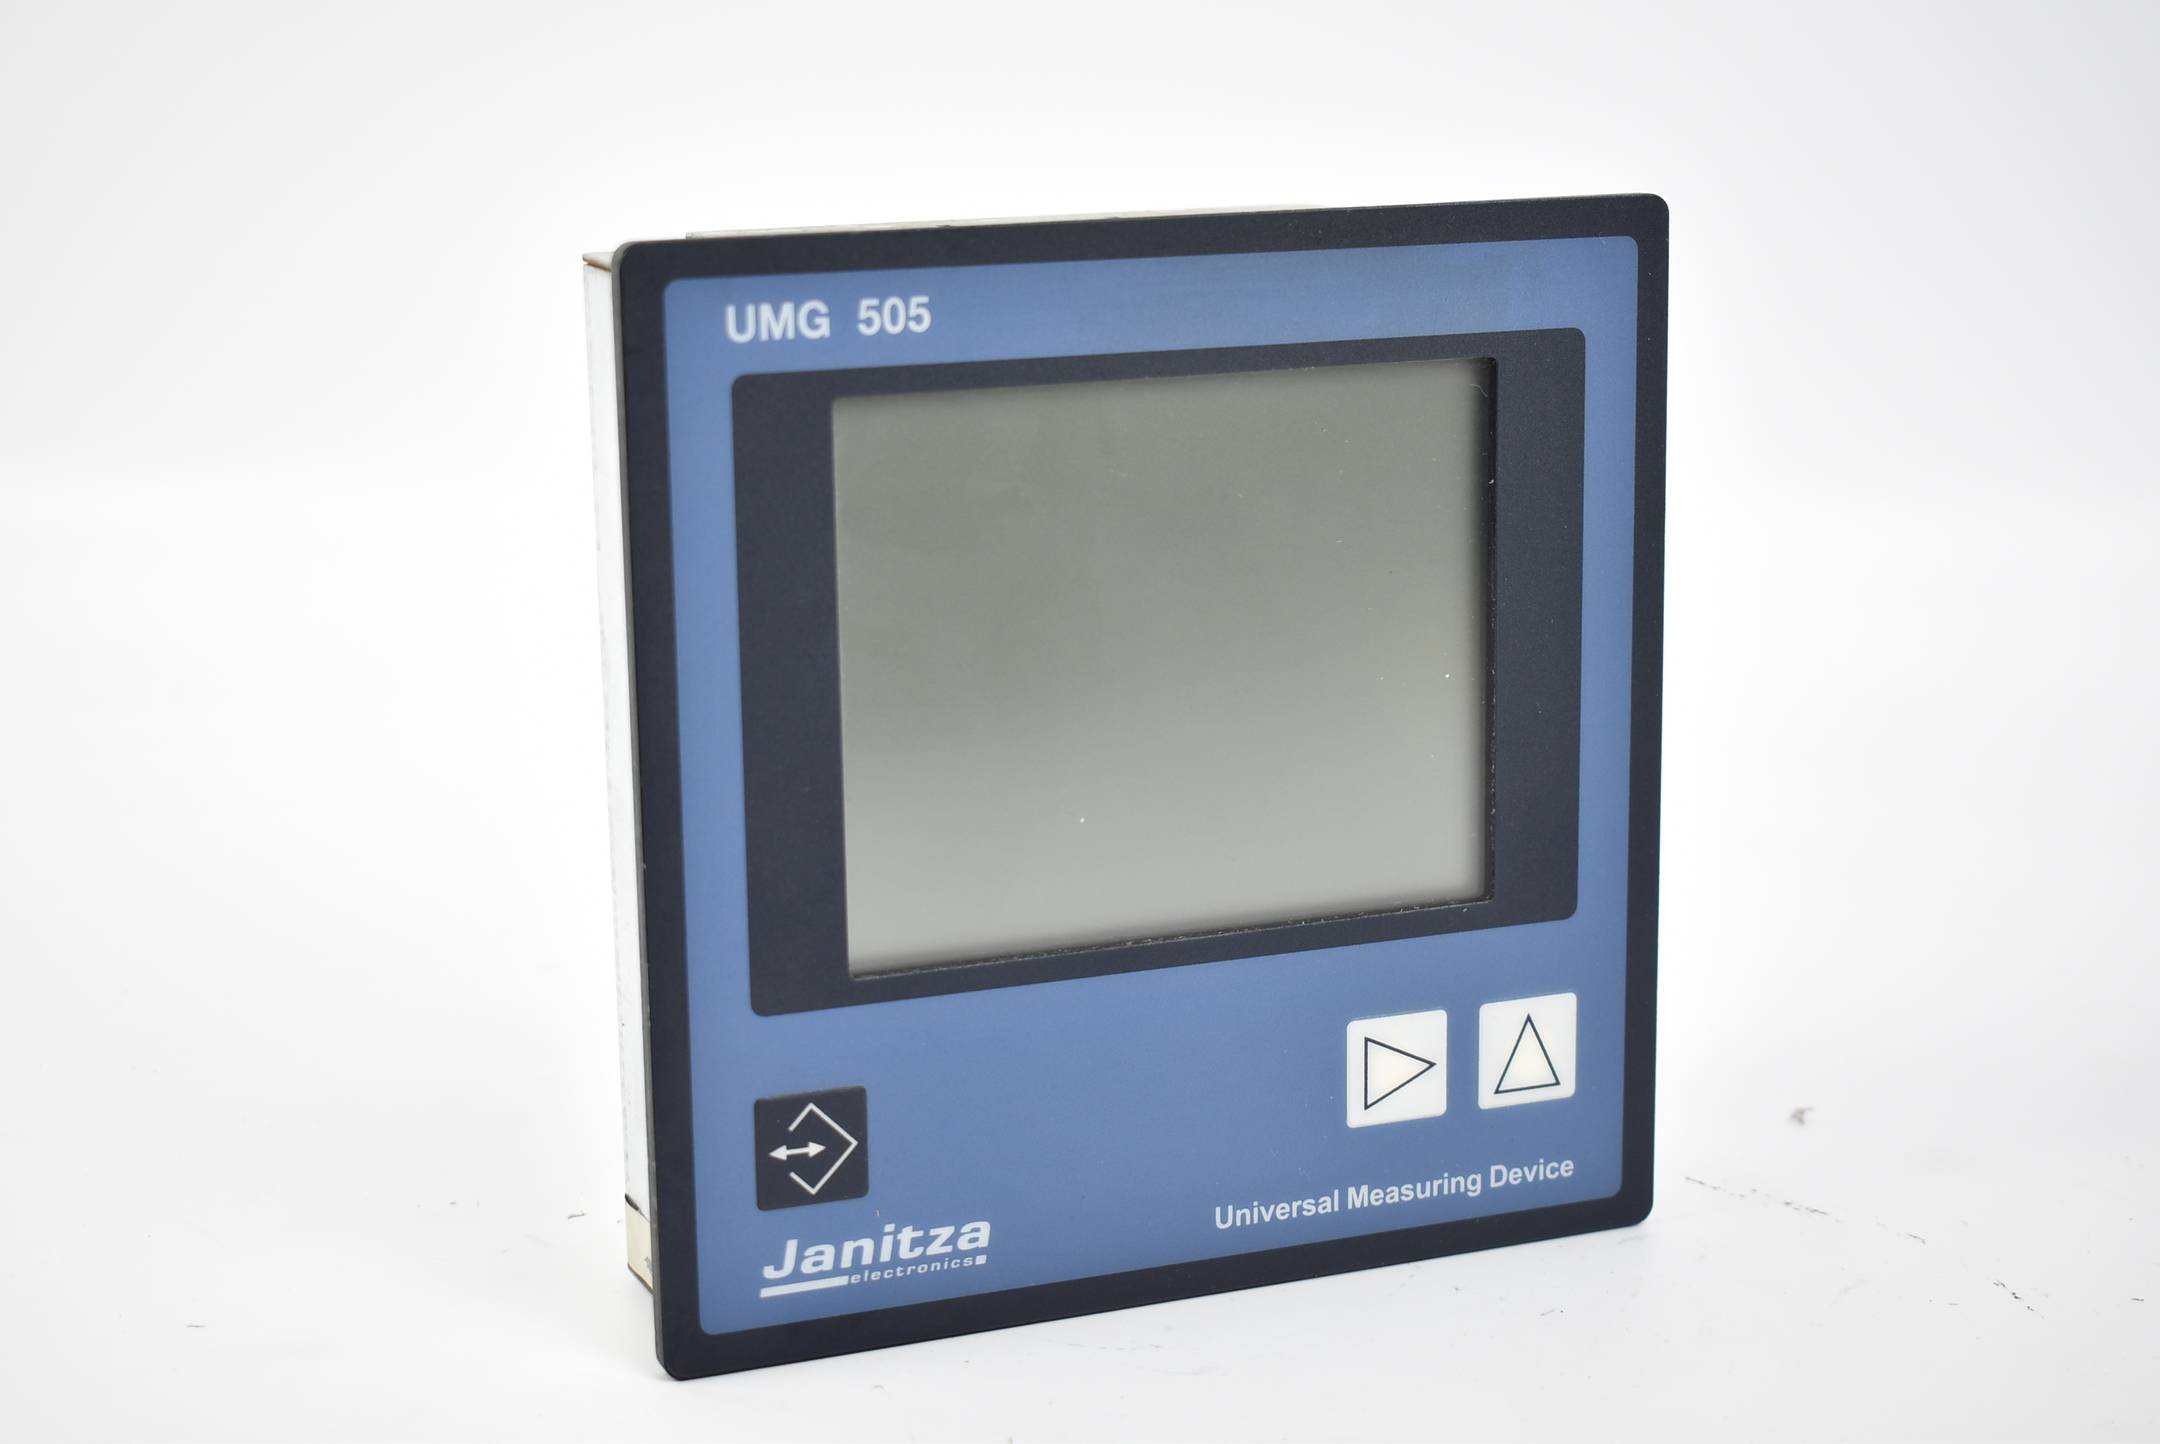 Janitza Universal Measuring Device UMG 505